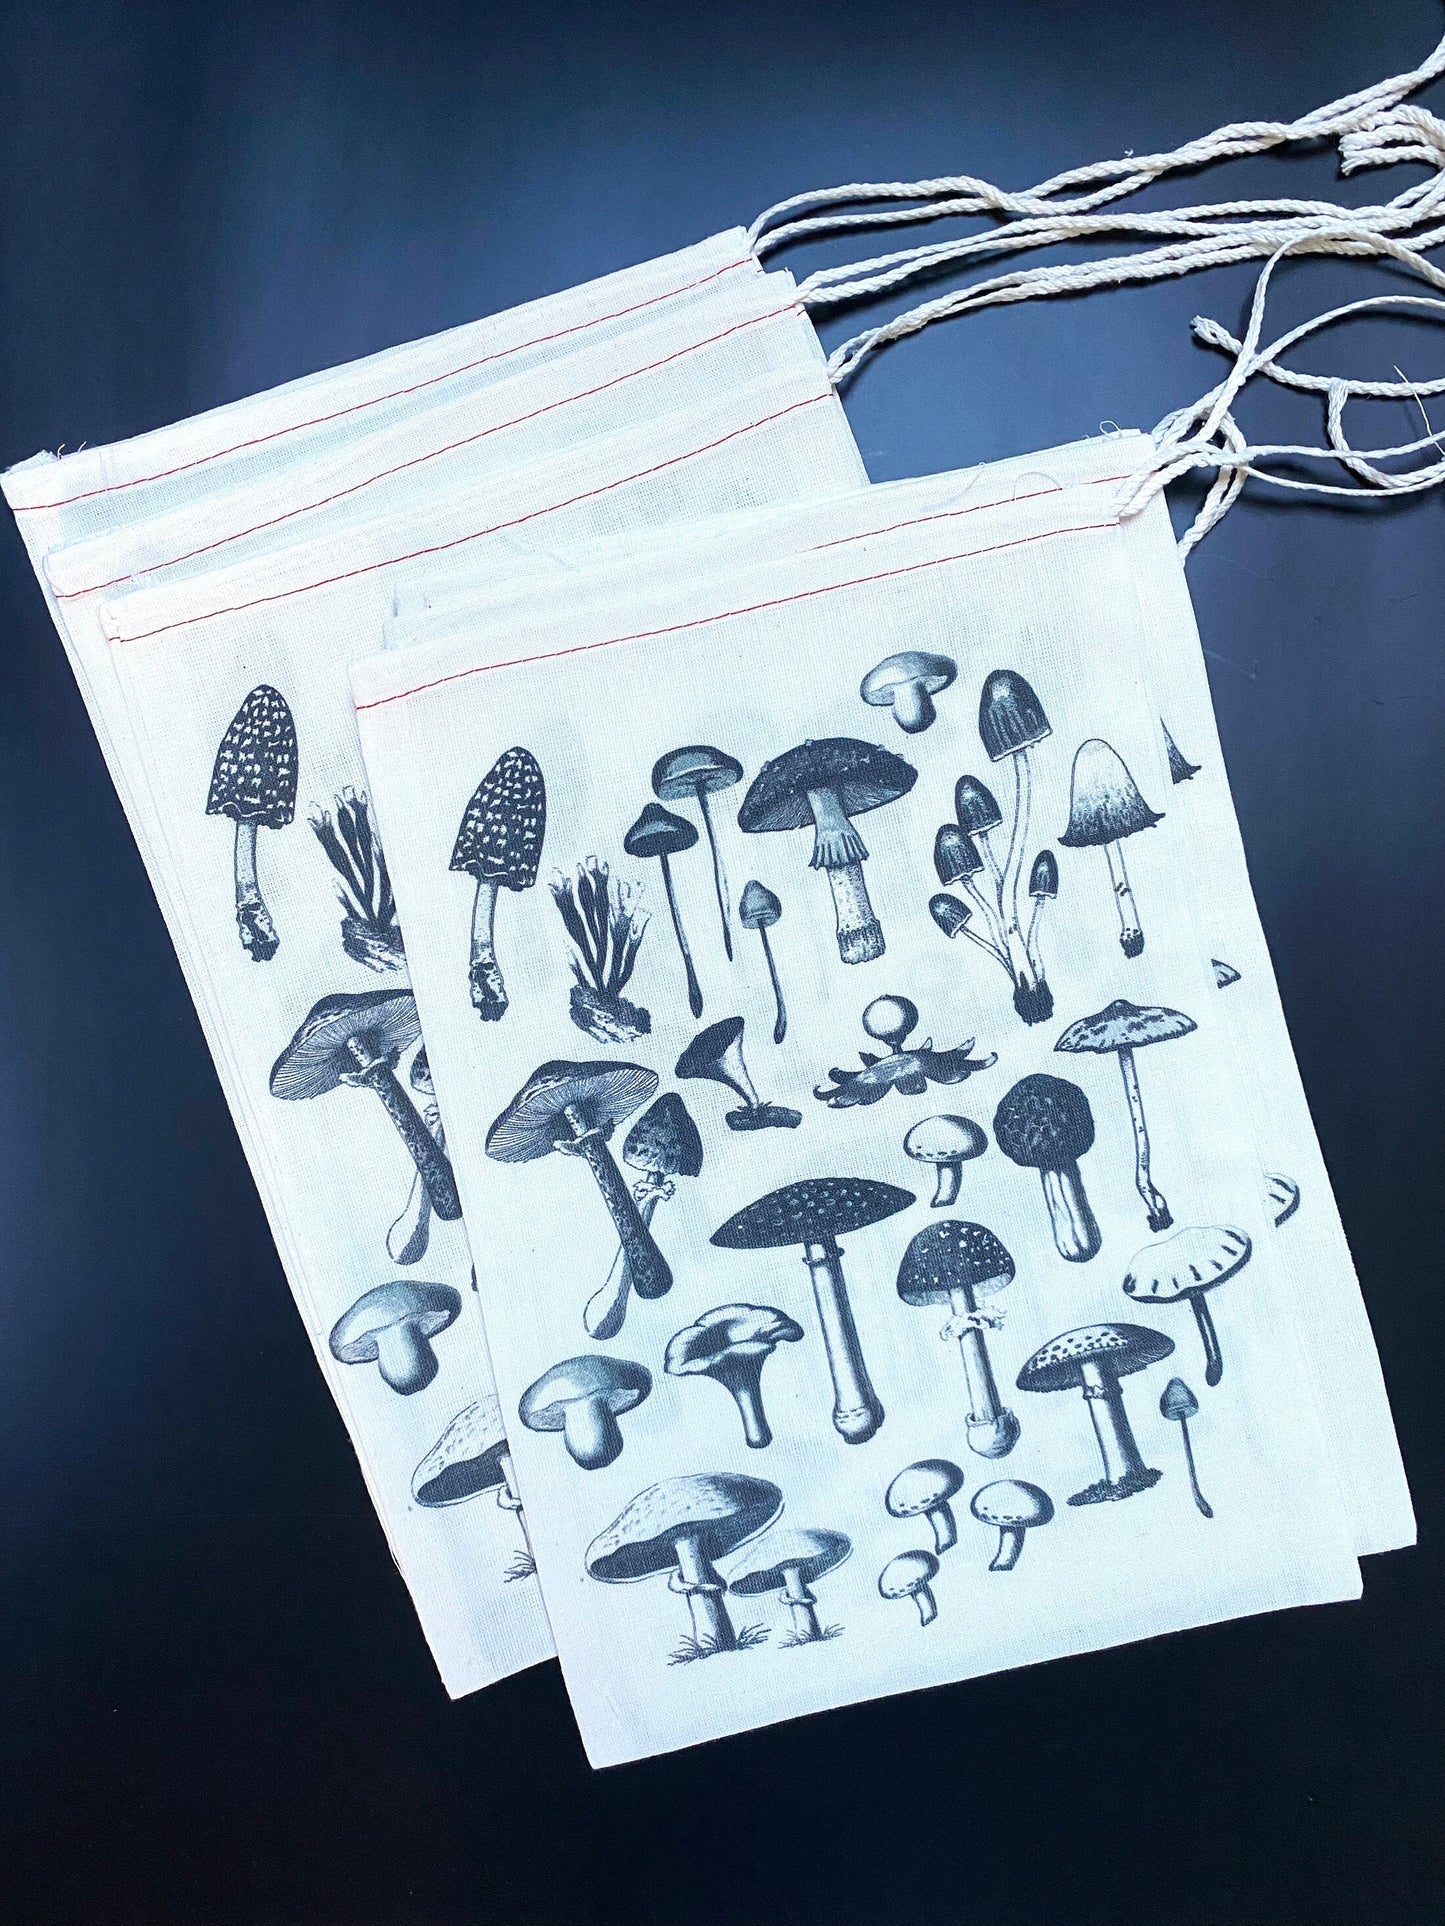 SET of FUNGI Gift Bags 8x12" - Mushrooms Collection Printed Drawstring Reusable Cotton muslin Bag birthday holiday gift sack